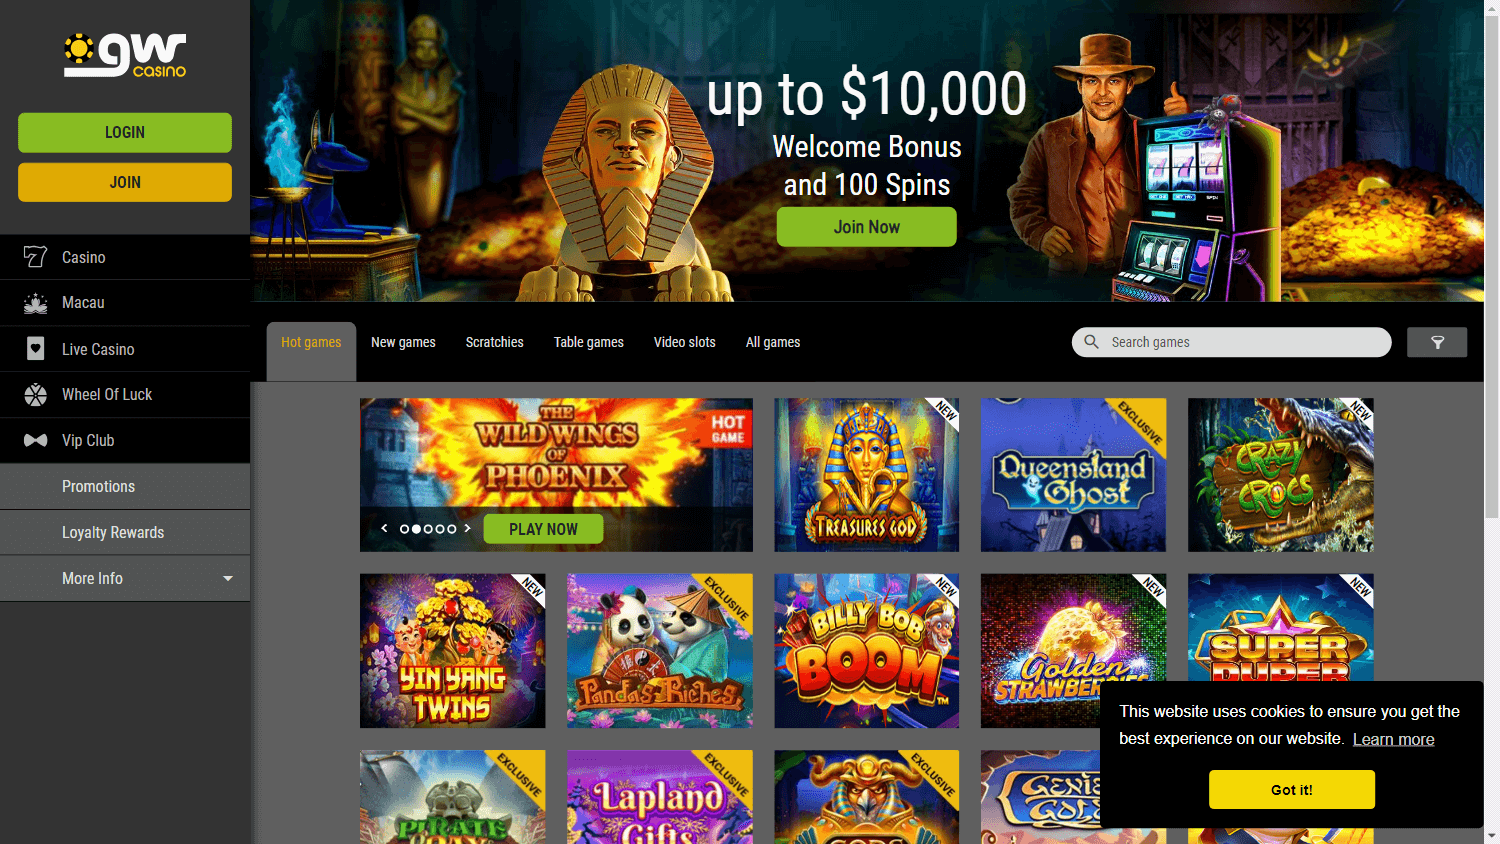 gw_casino_homepage_desktop